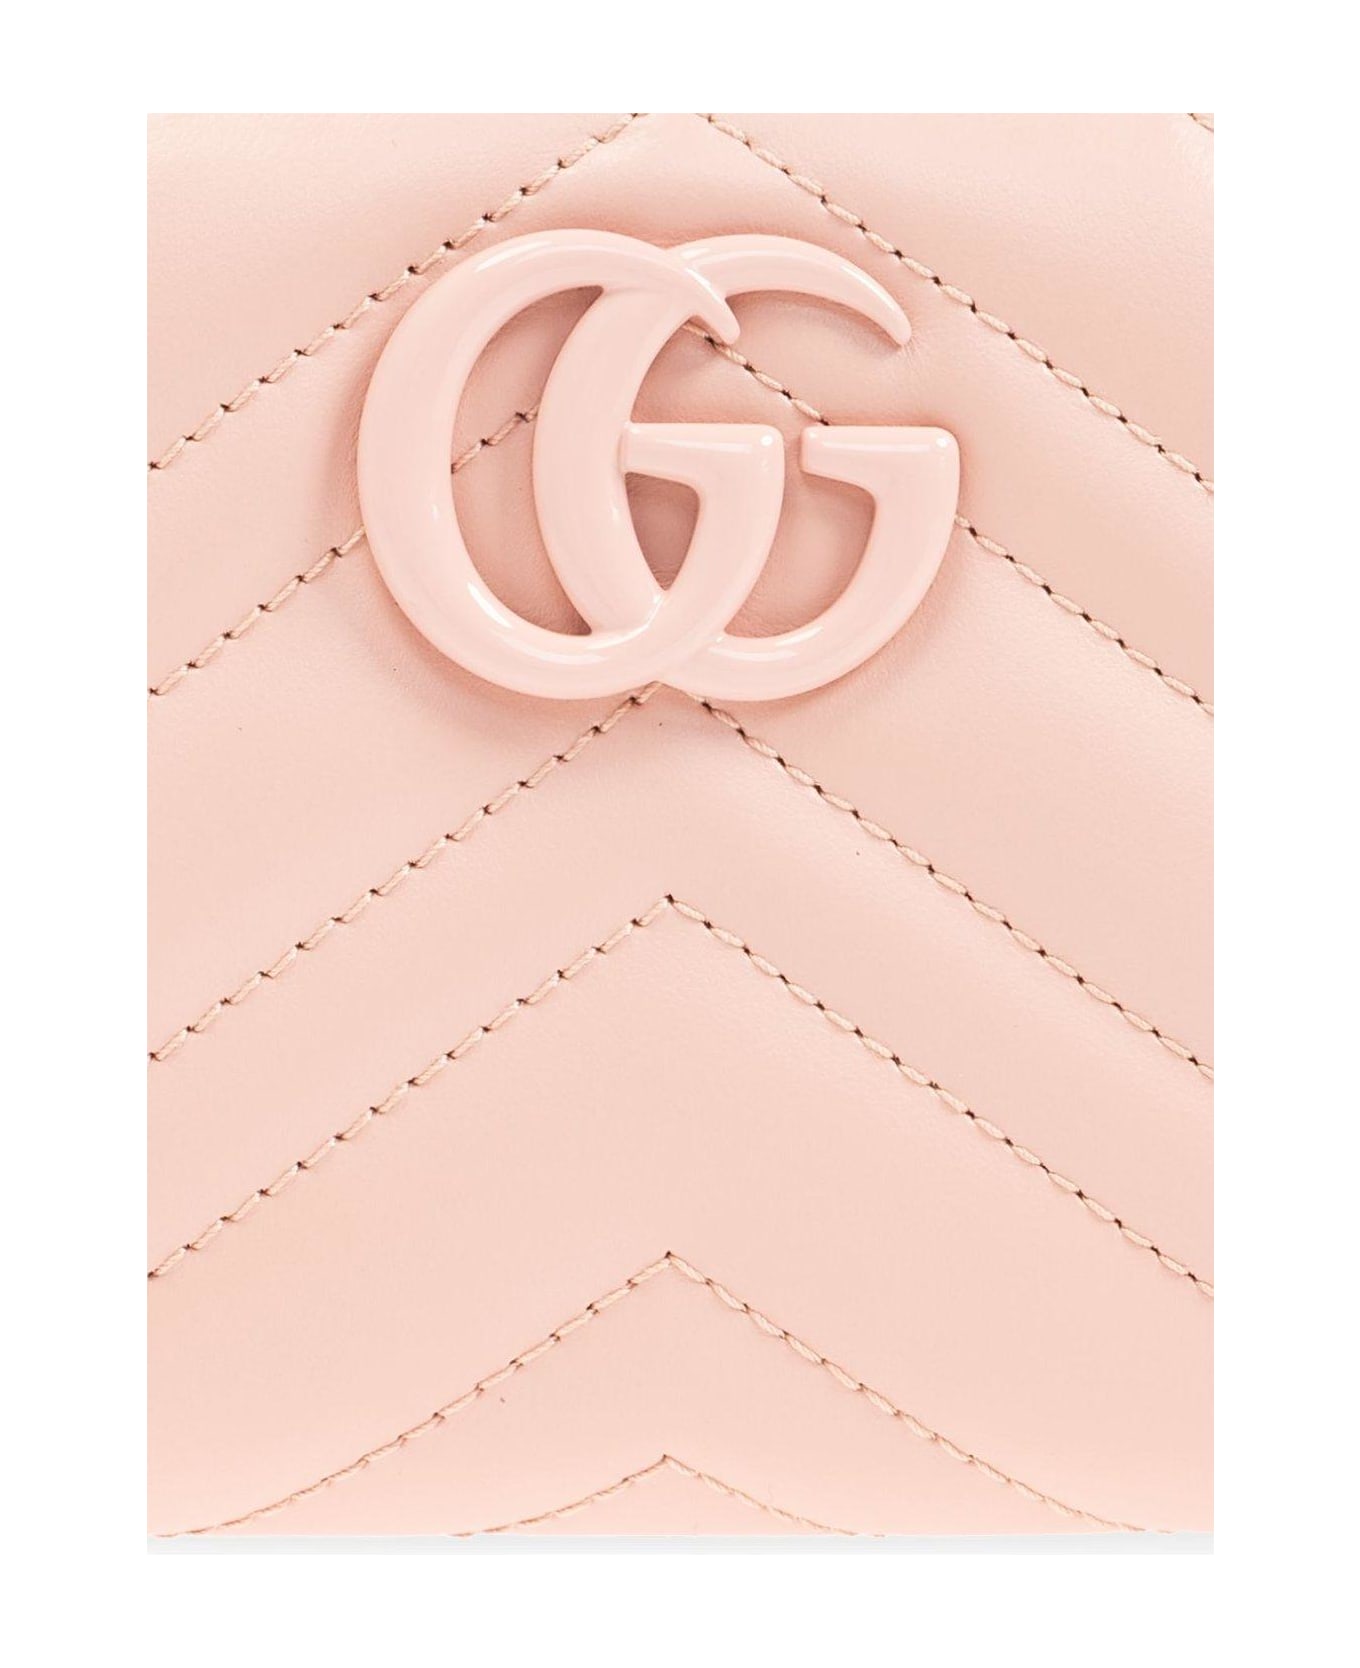 Gucci Gg Marmont Quilted Zip-around Wallet - Pink